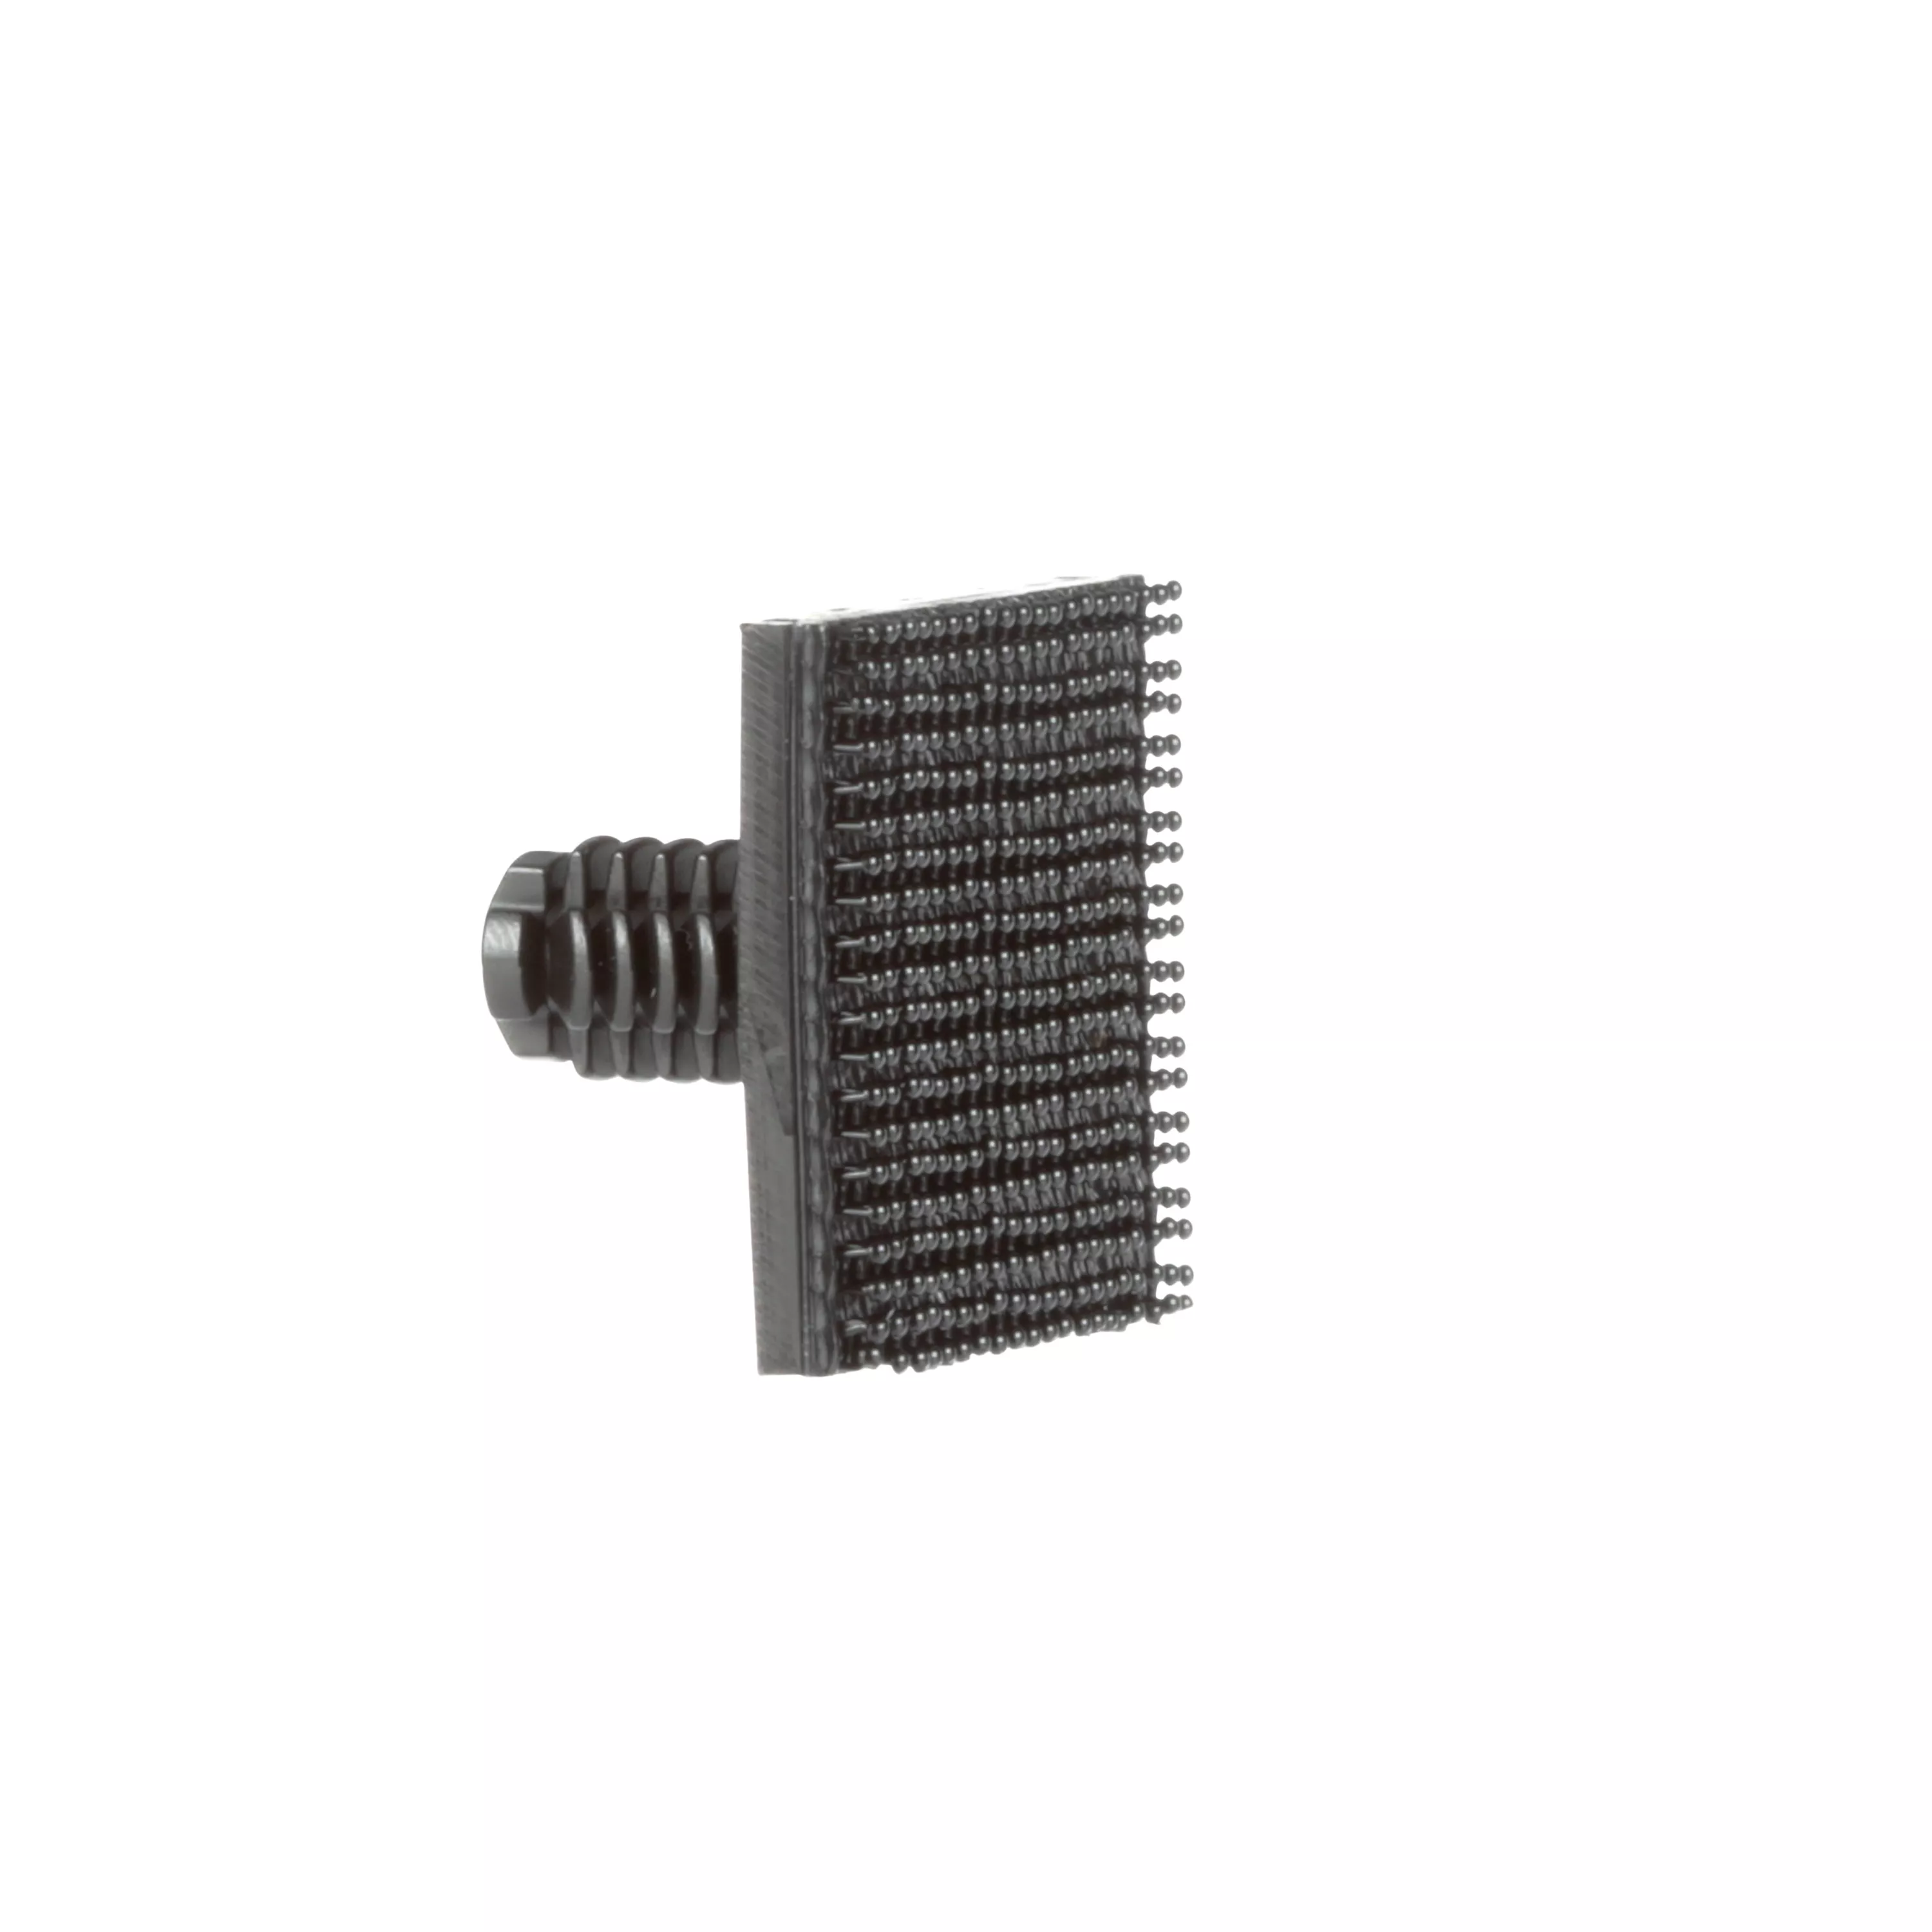 3M™ Dual Lock™ Reclosable Fastener SJ3748, Pop-in Piece Part, Stem
Density 400, Black, 1 in x 1 in, 5000 Piece/Case